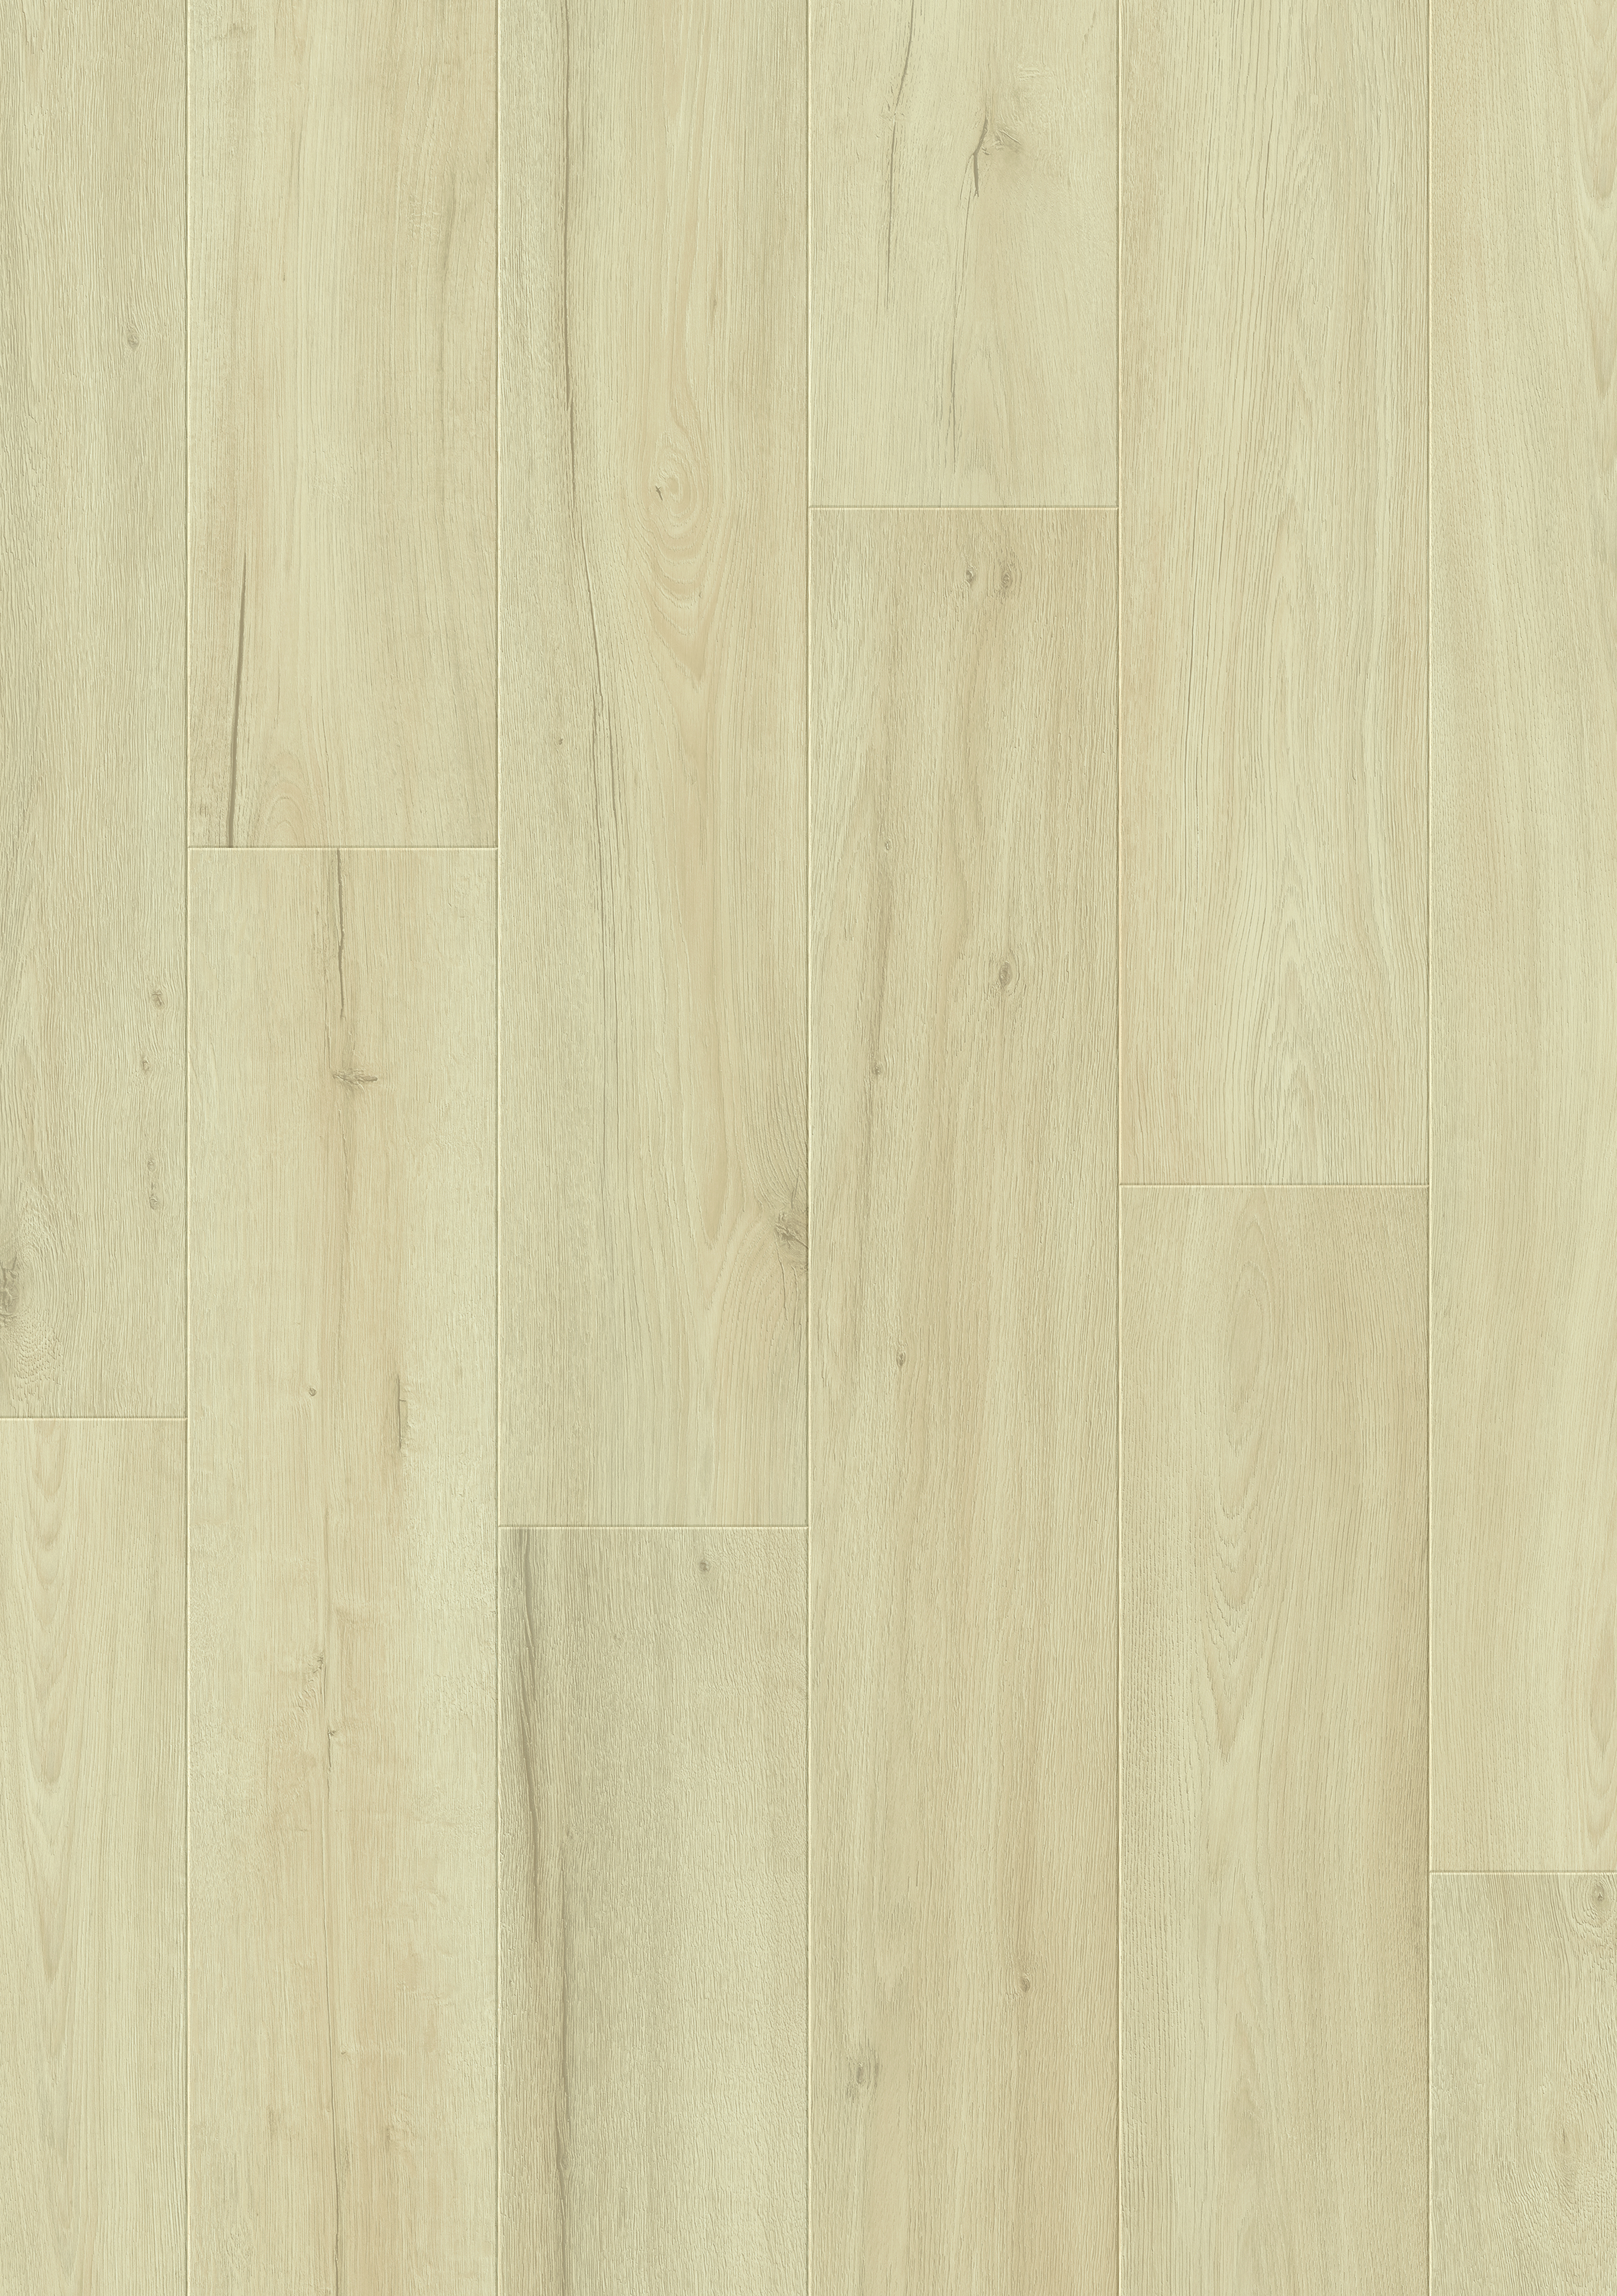 Quick-Step Salto Scandi Light Oak 8mm Laminate Flooring - Sample